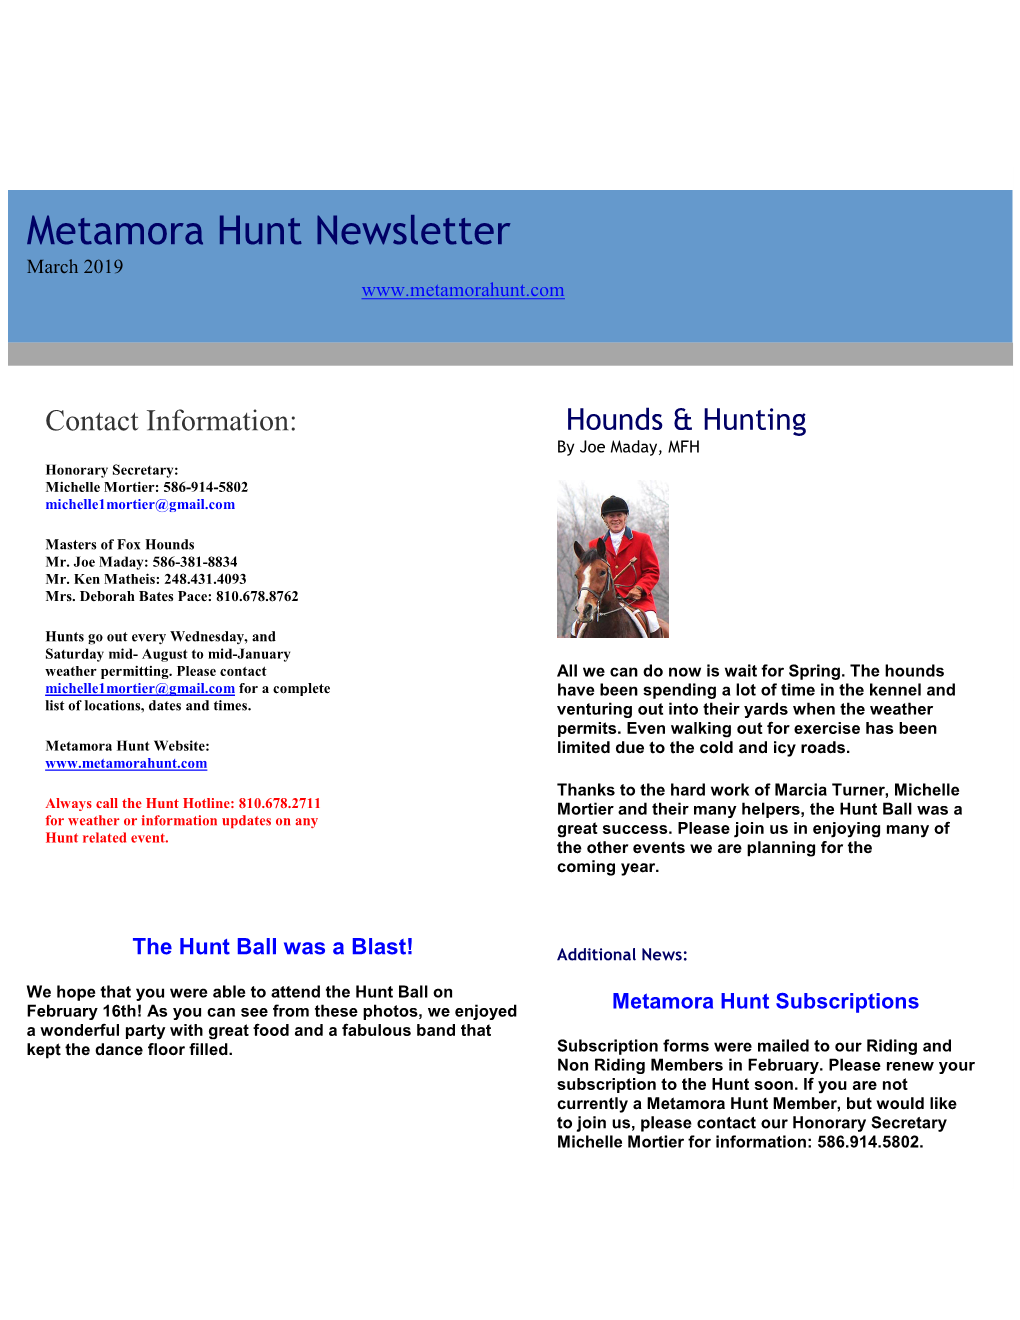 Enewsletter March 2019 Metamora